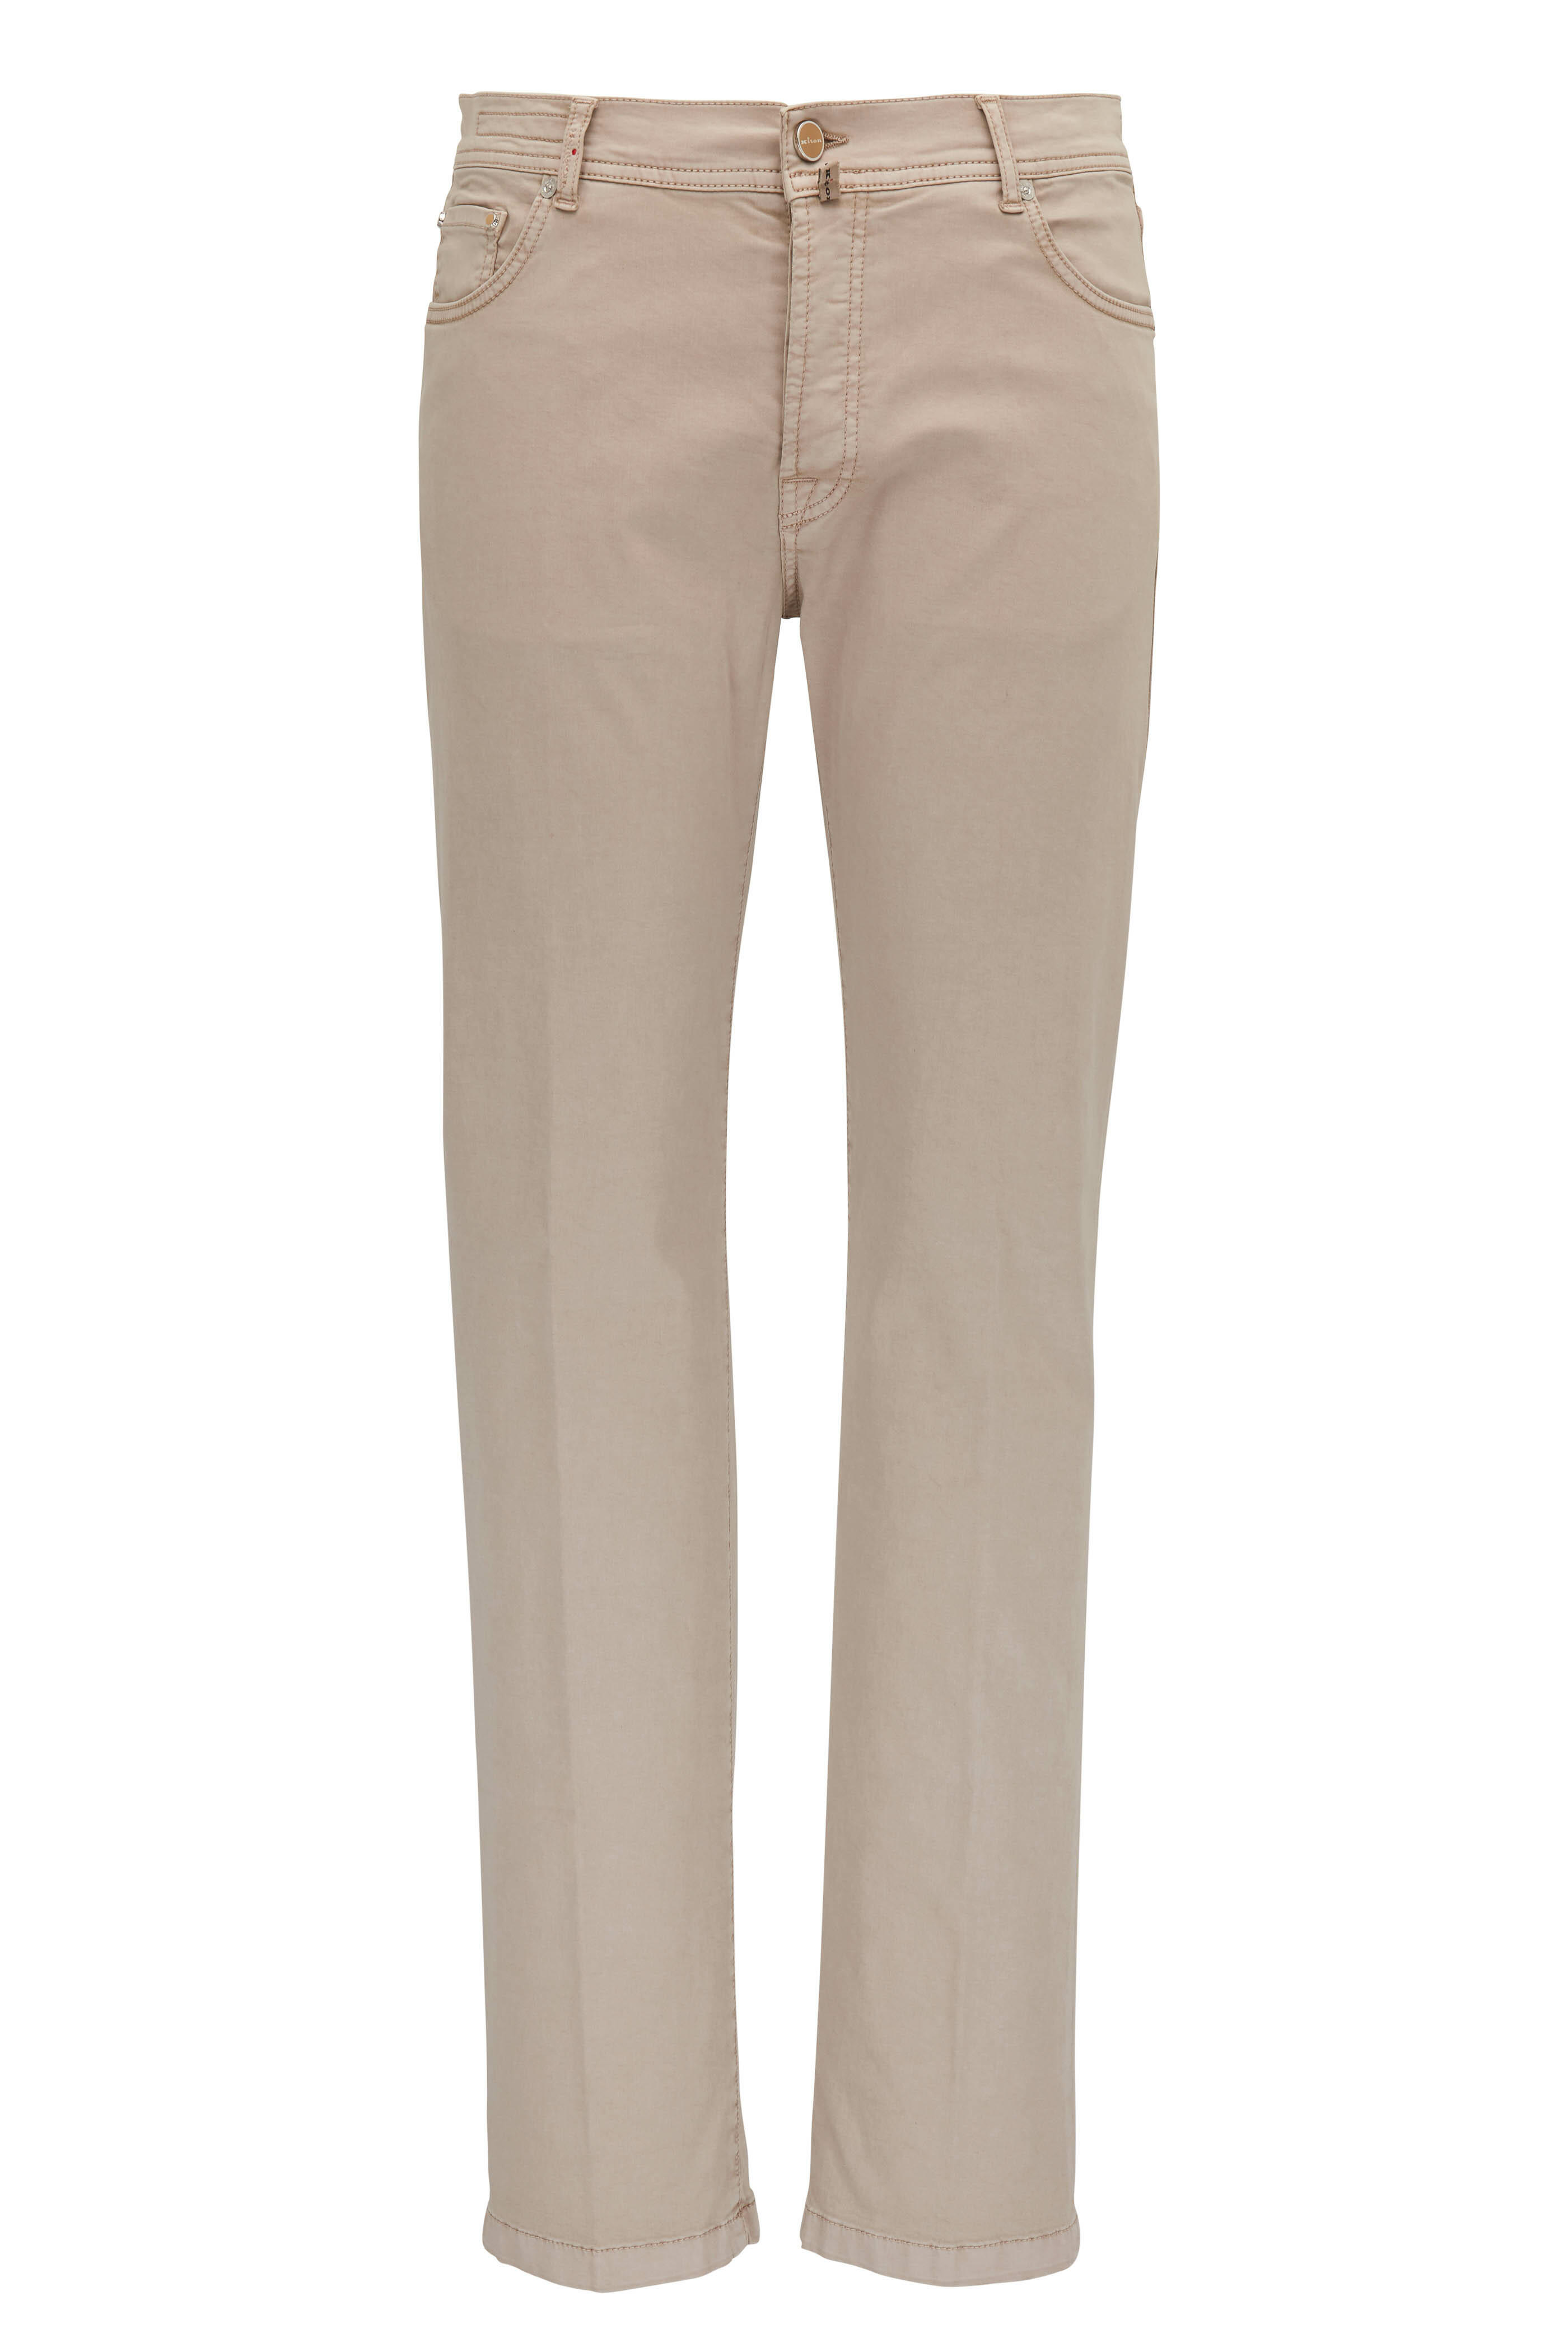 Kiton Men's Slim Fit Cotton-Stretch 5-Pocket Pants - Bergdorf Goodman